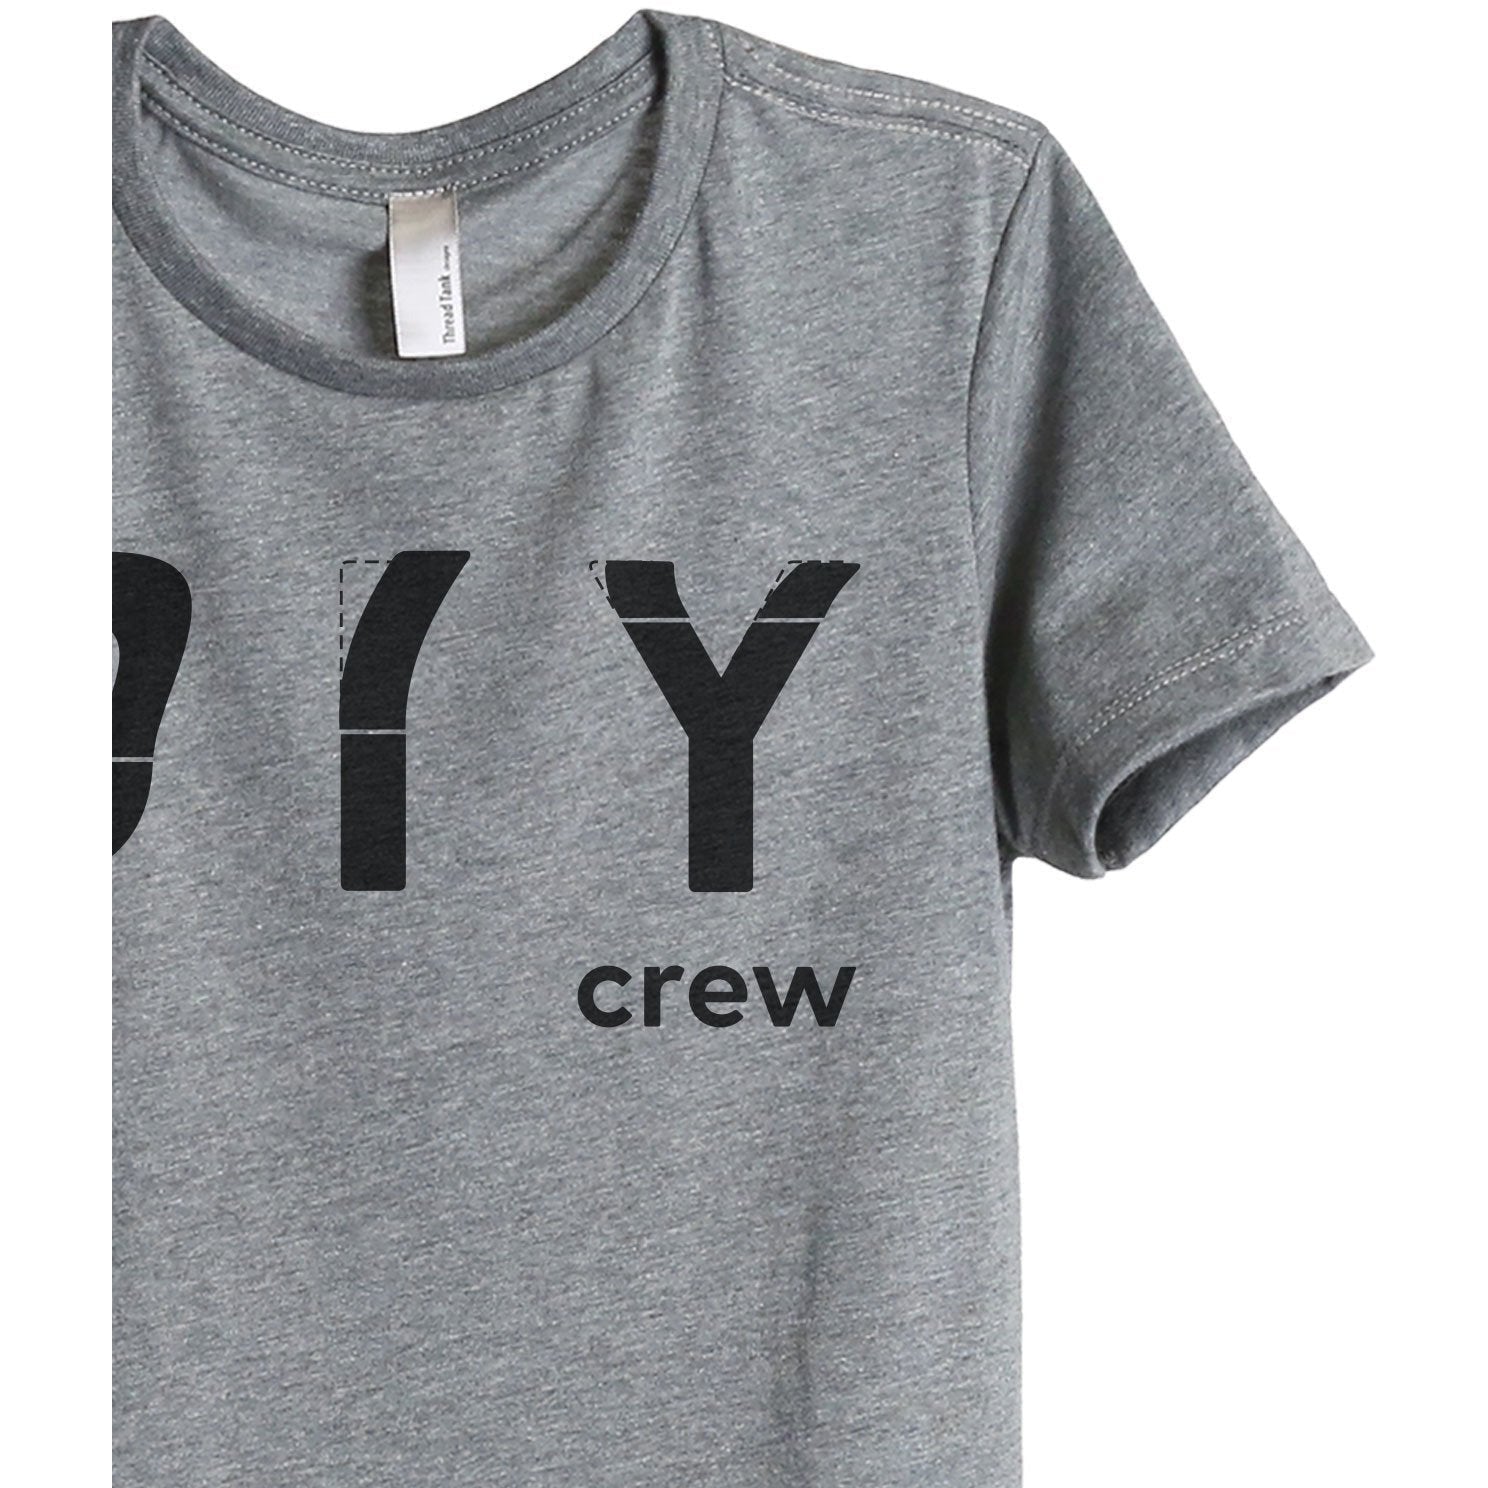 DIY Crew Women's Relaxed Crewneck T-Shirt Top Tee Heather Grey Zoom Details
